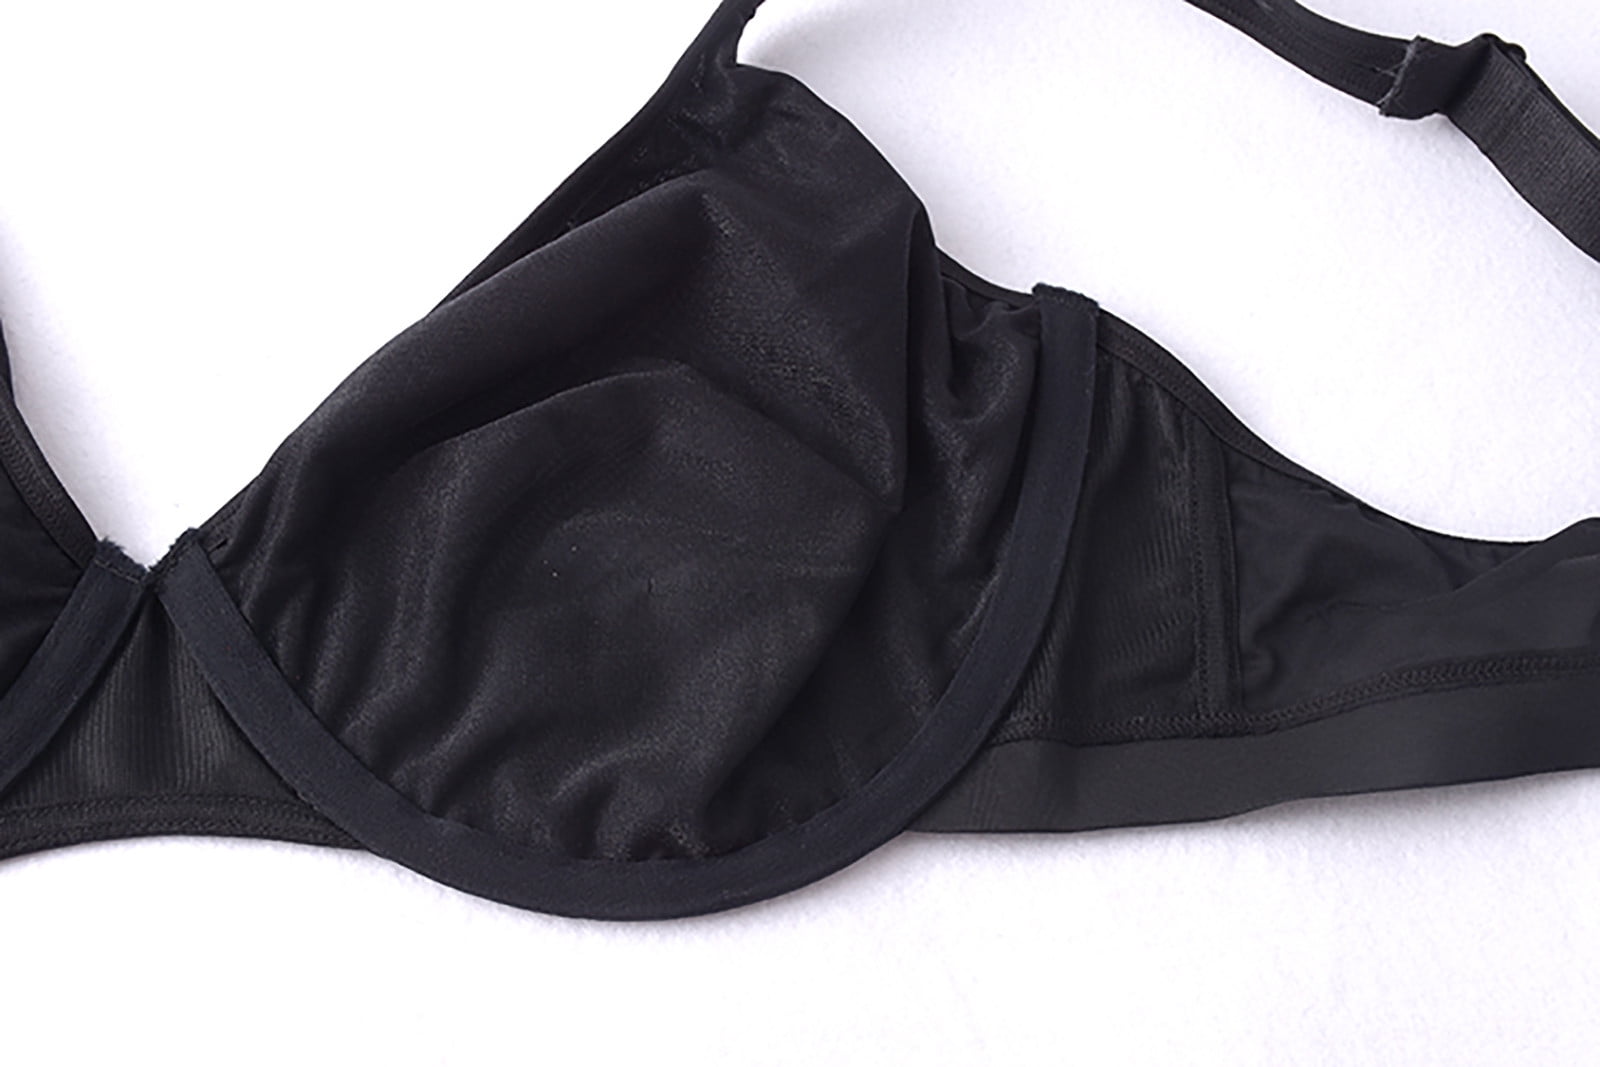 Plain black bra